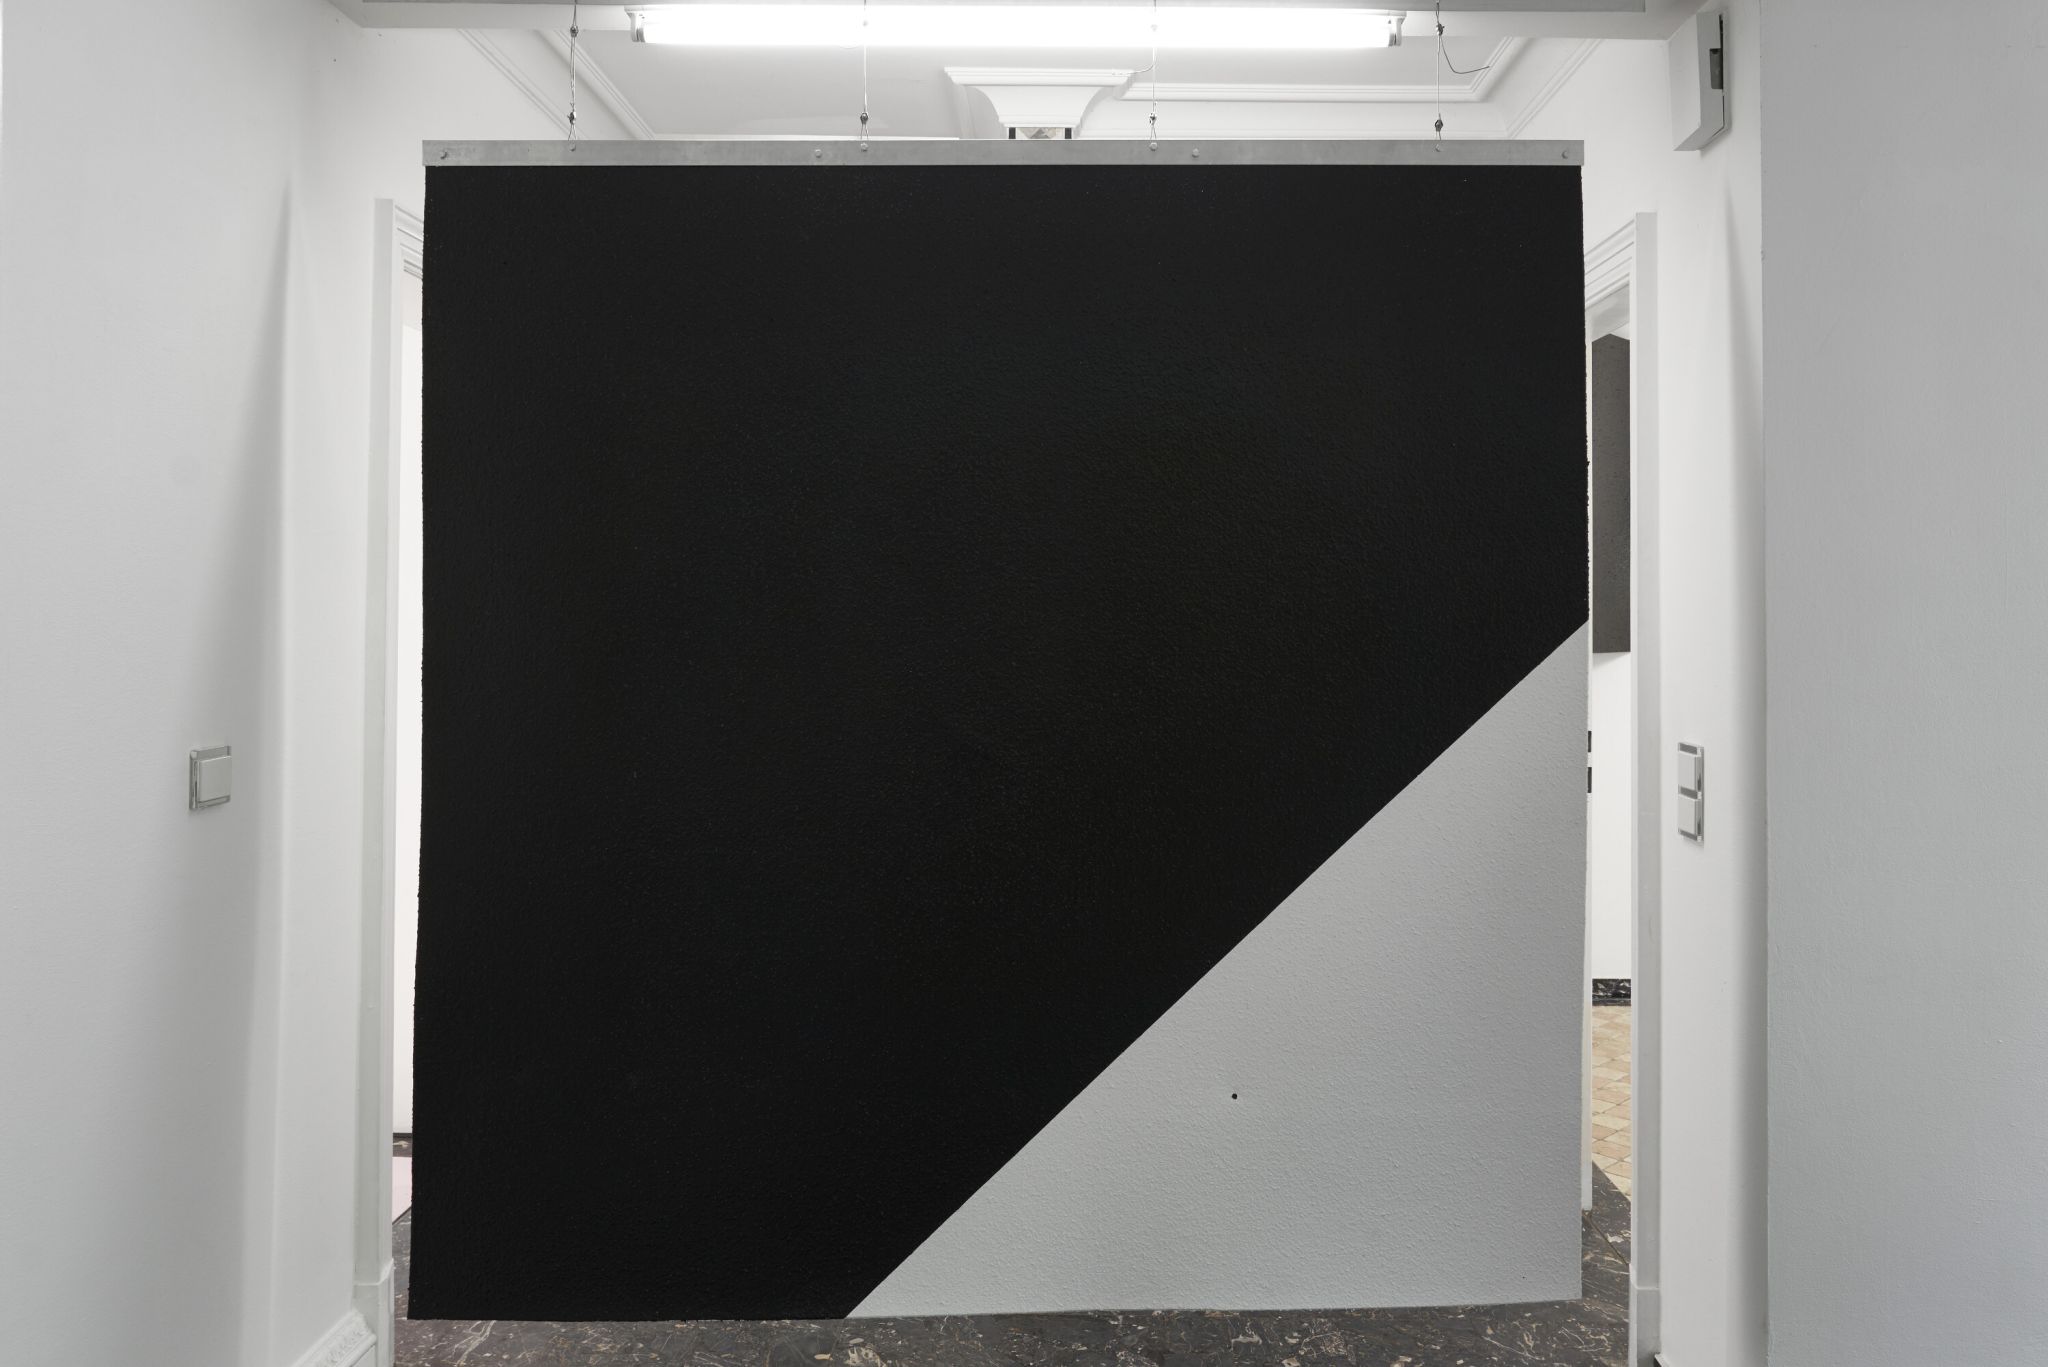 Gerry Bibby and Henrik Olesen, Naked Lunch, 2016, Carpet, paint, steel, aluminium, wood, photocopy, 180 ⁠× ⁠180 ⁠⁠cm